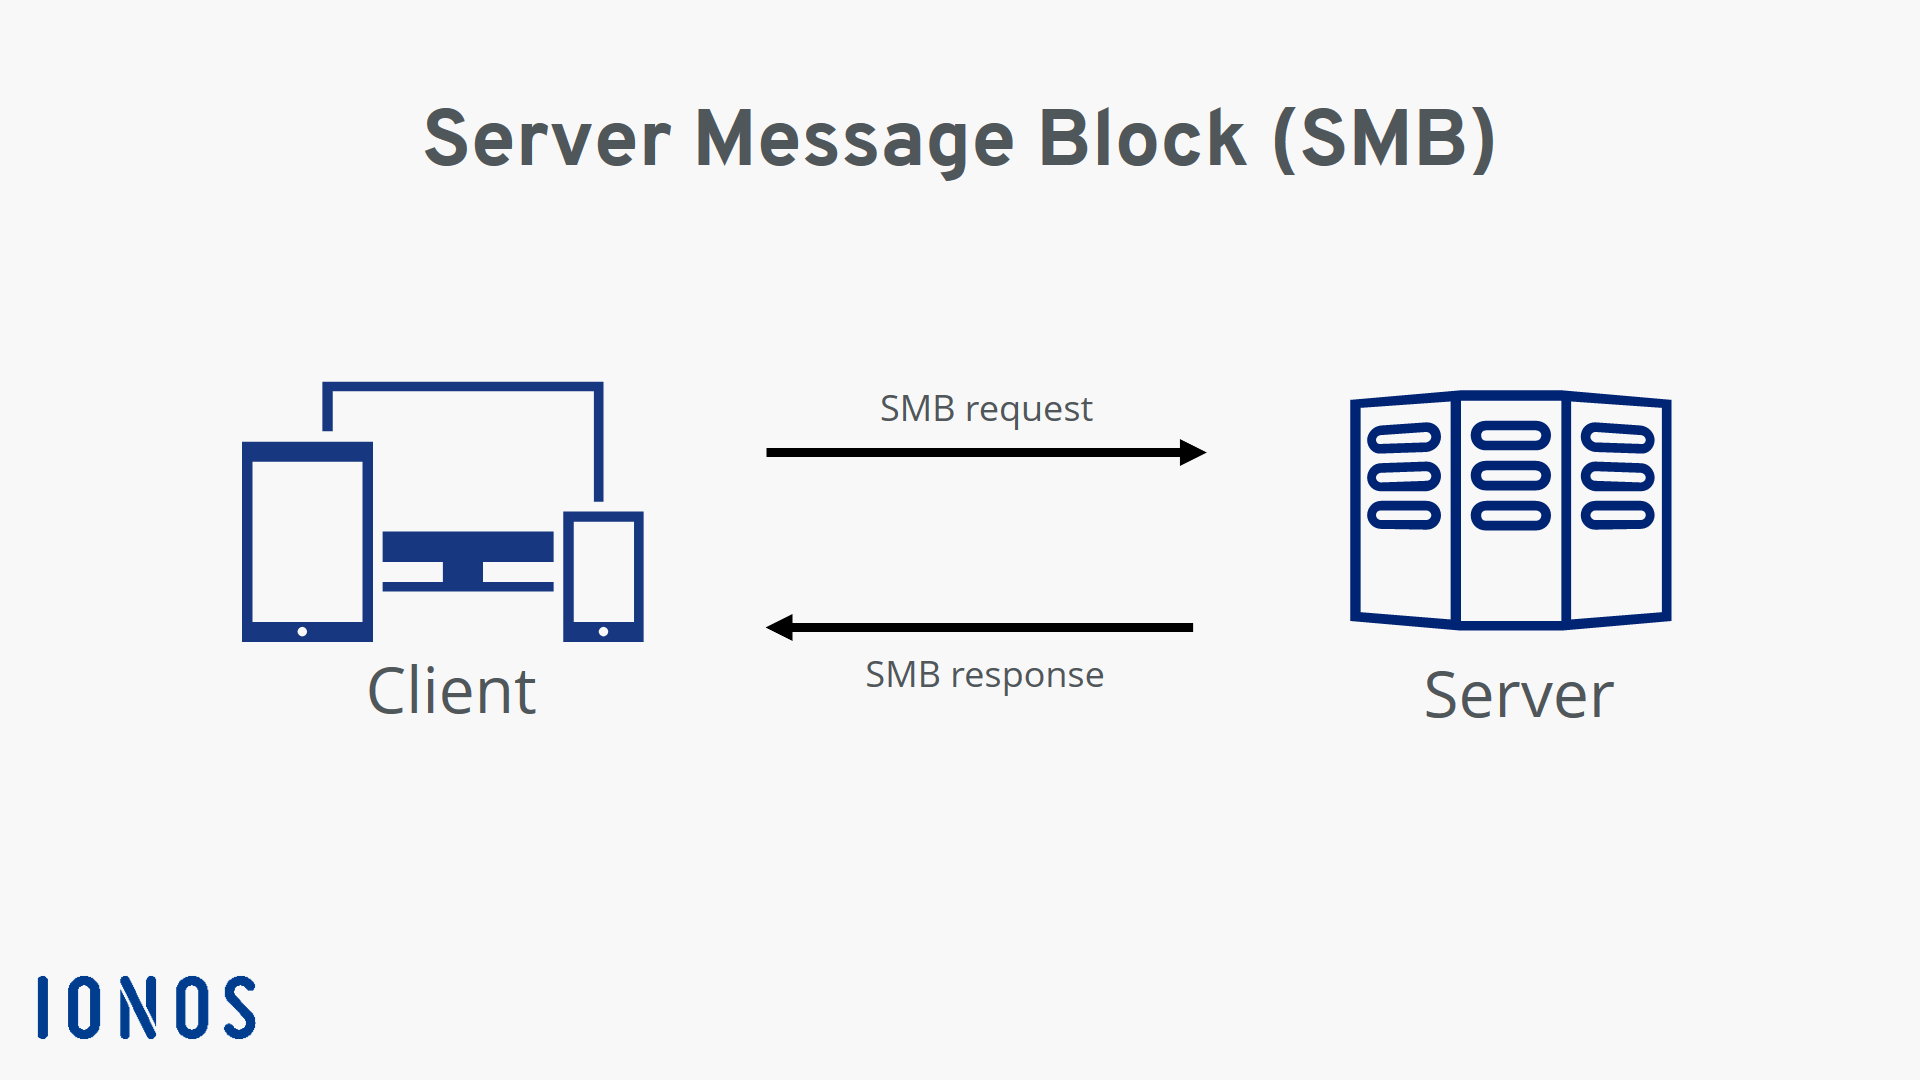 Server Message Block: Figure showing message exchange